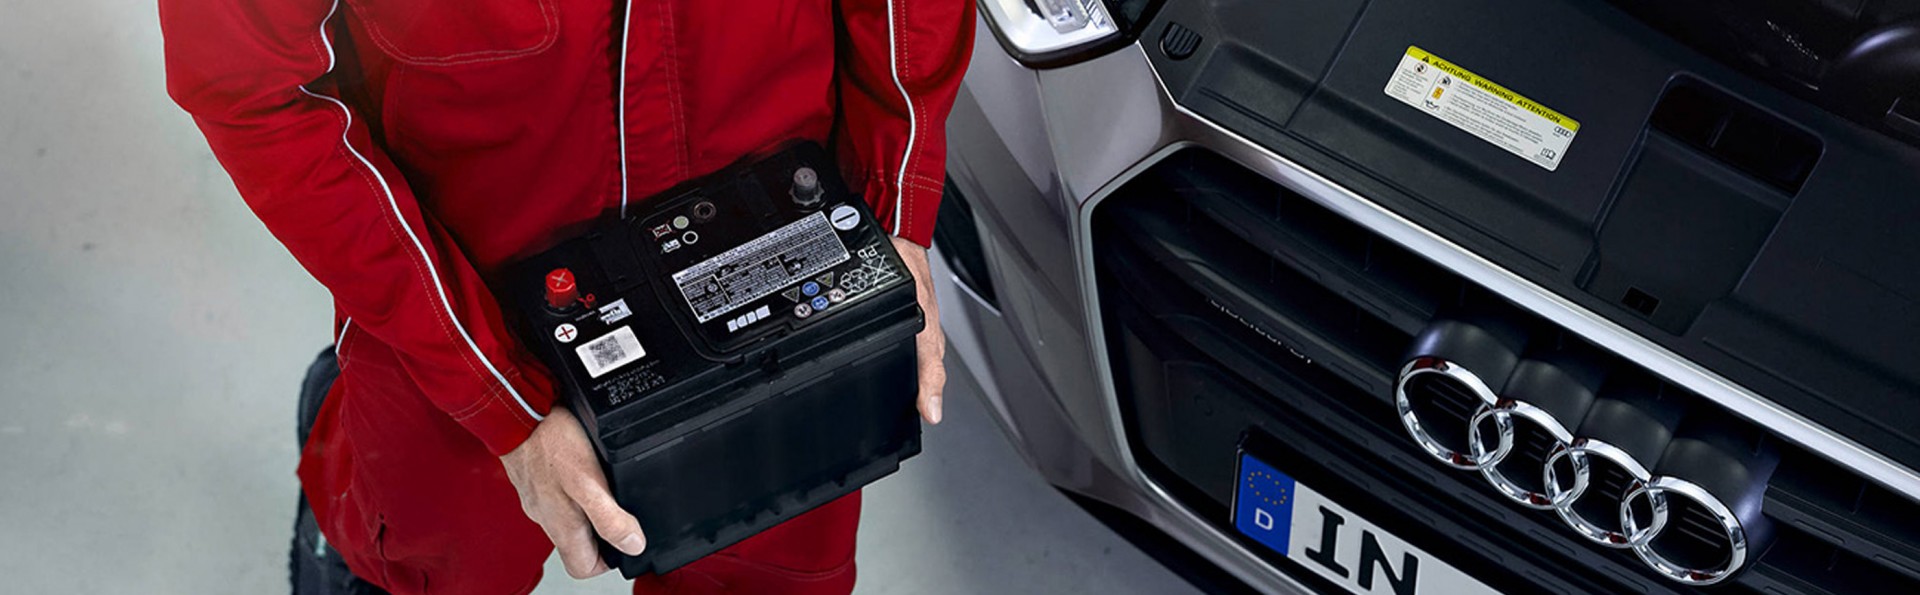 Angebote > Teile / Zubehör > Audi Original Teile > Audi Original  Starterbatterien